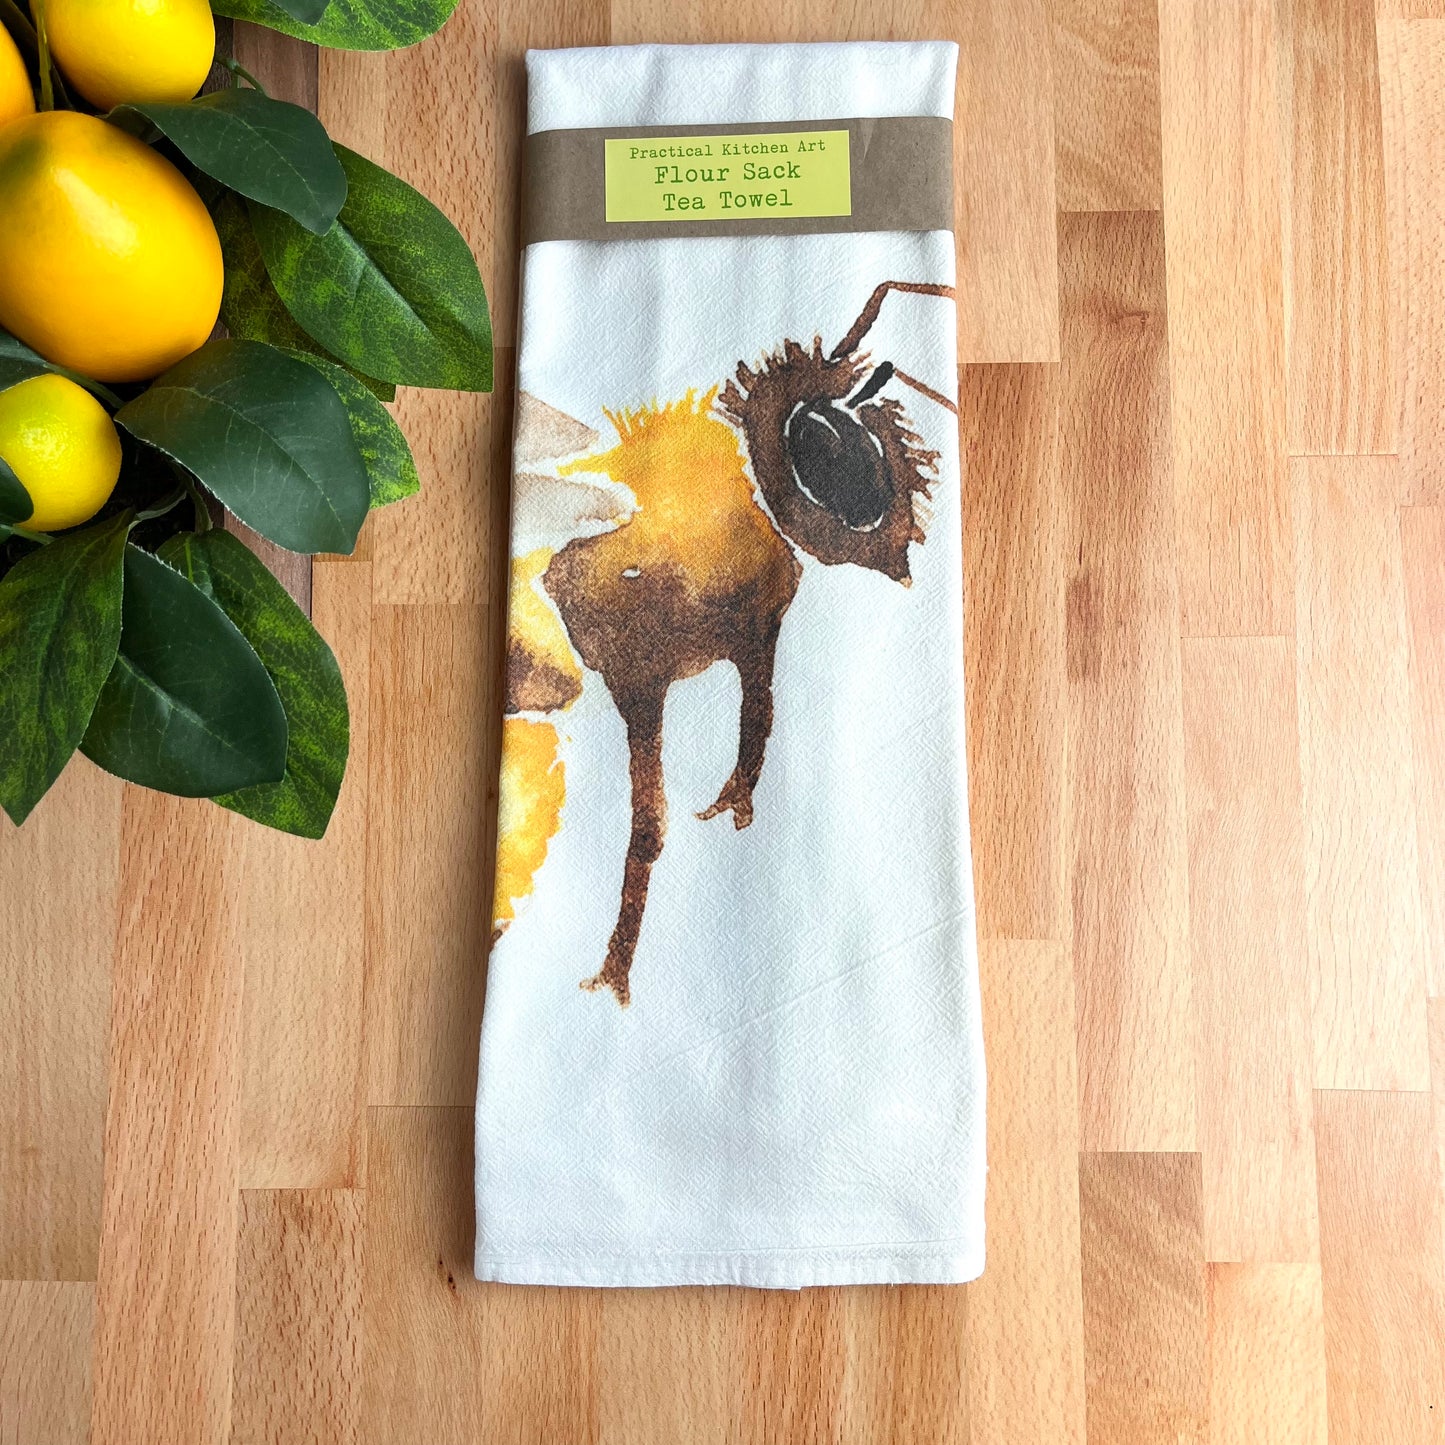 Flour Sack Tea Towels, Honey Bee, Garden Theme